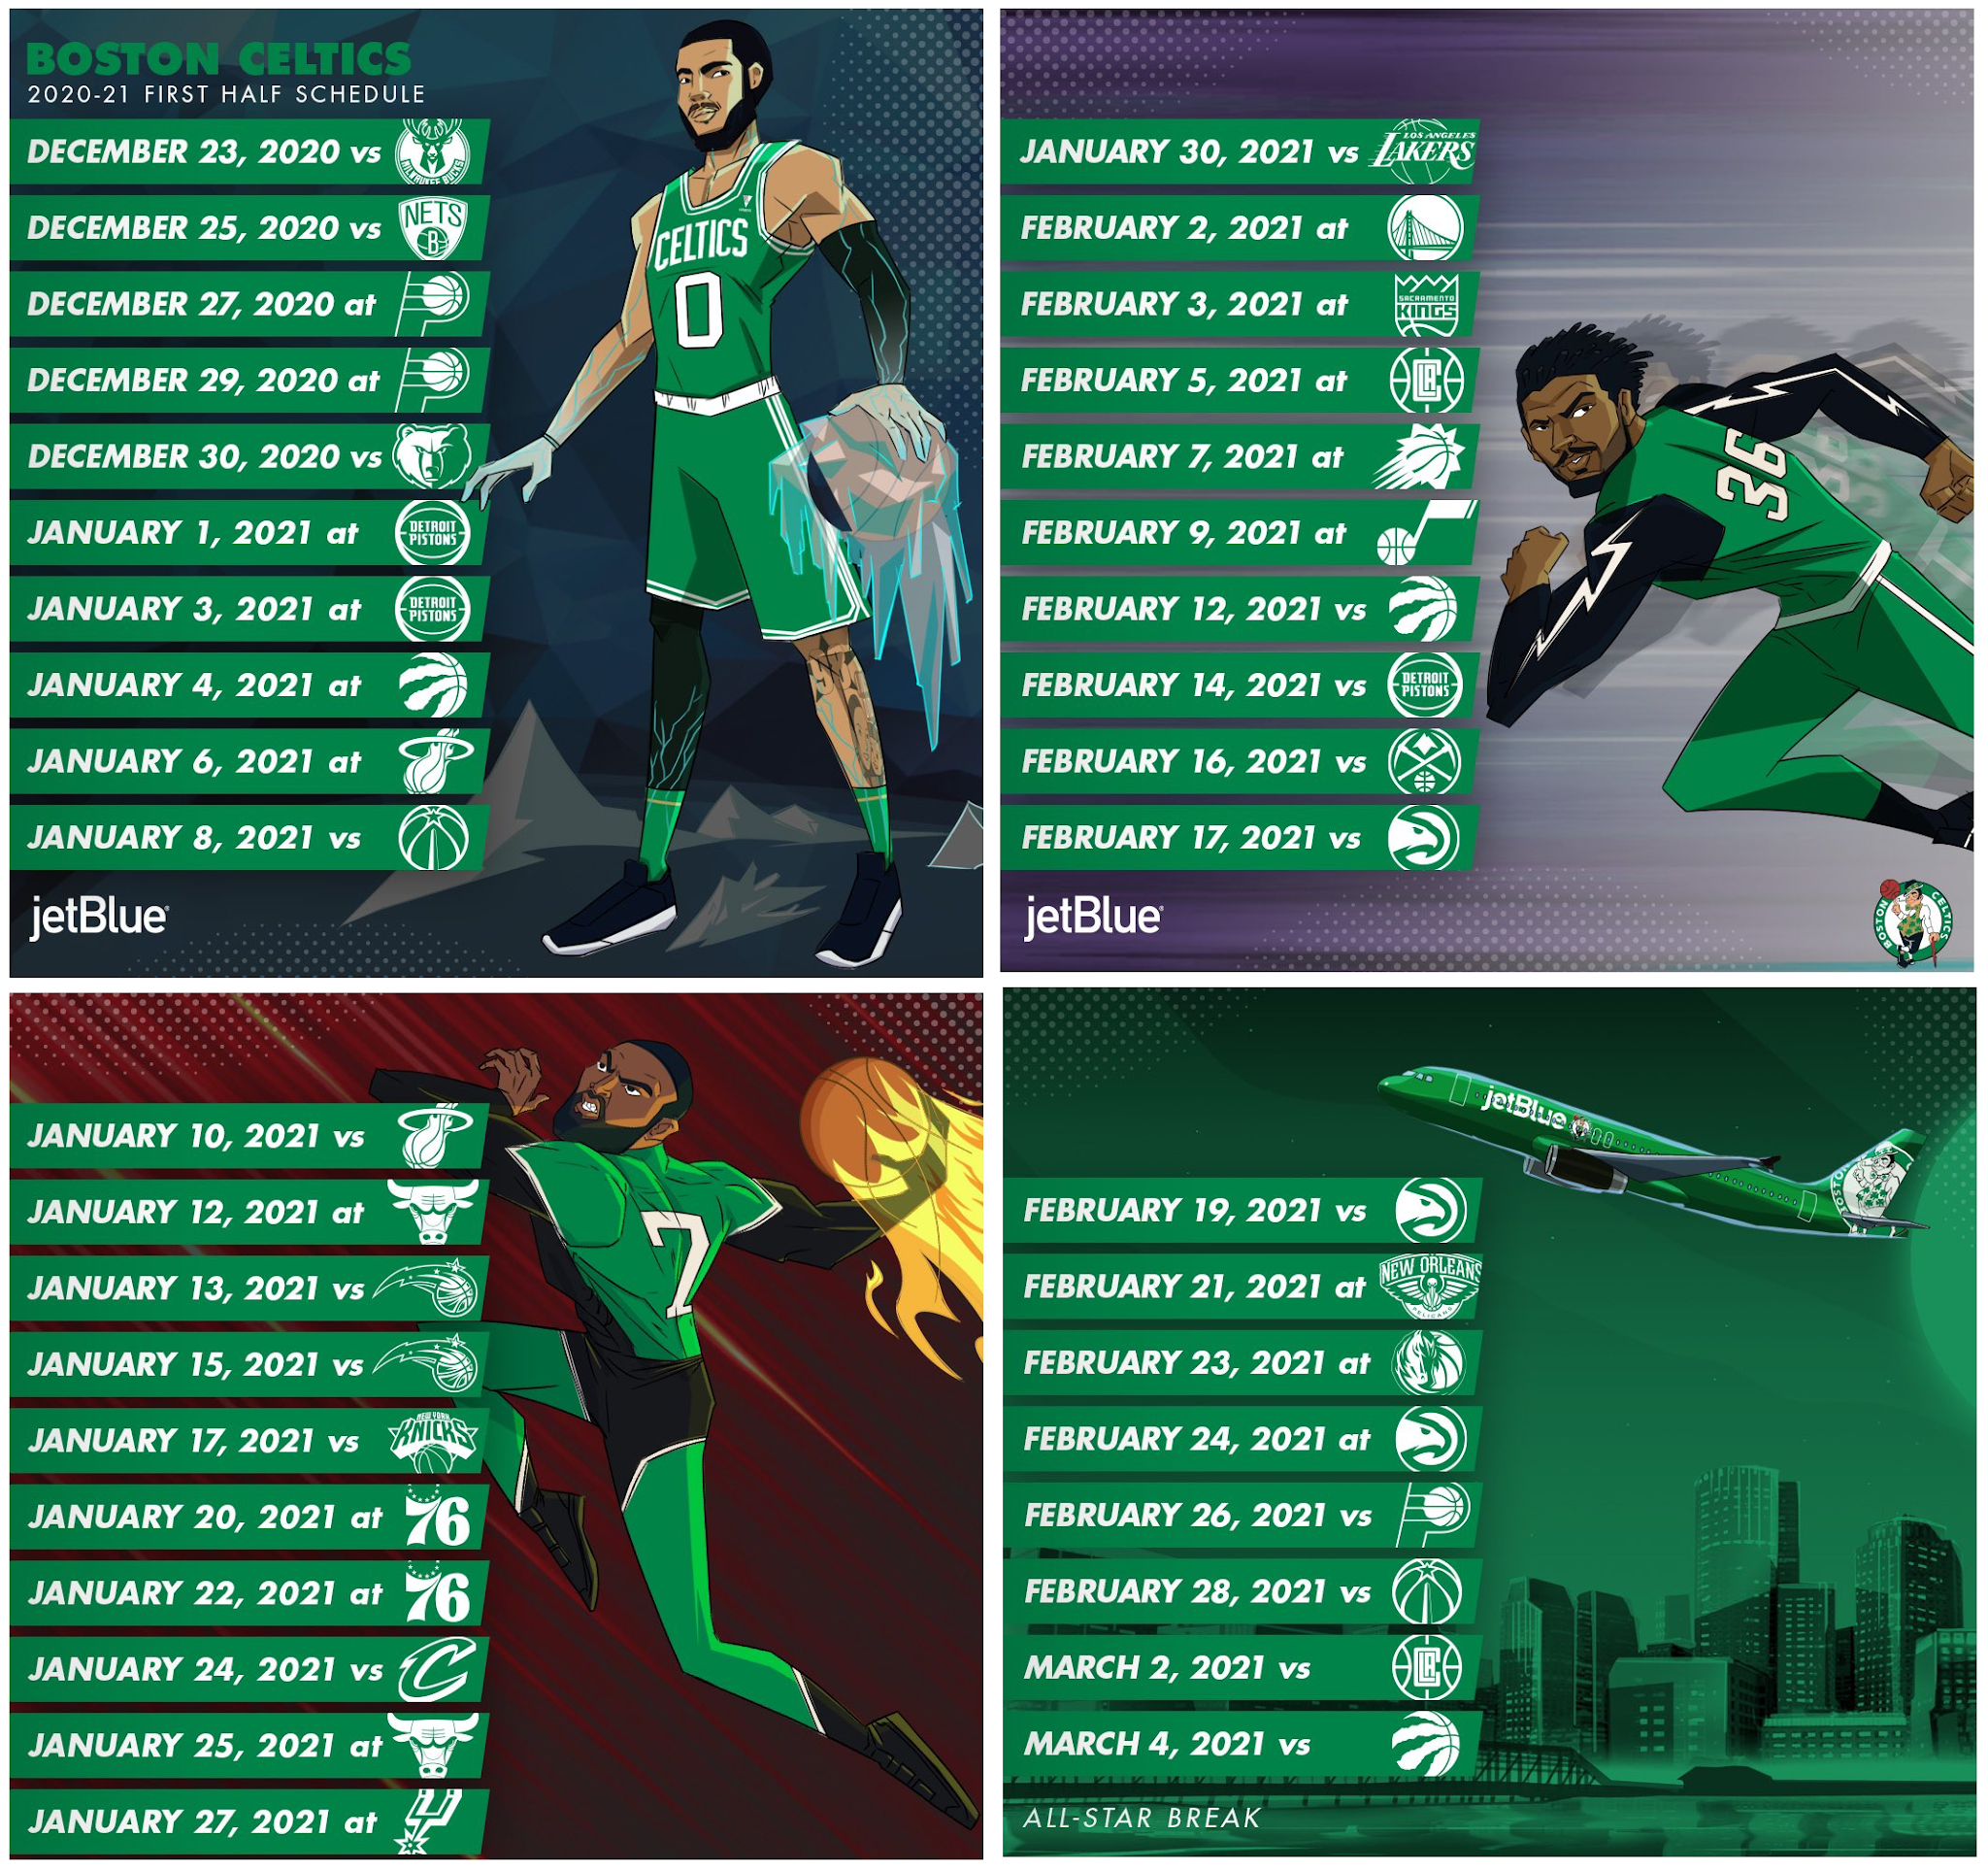 Celtics release schedule for the first half of the season | CelticsLife.com - Boston Celtics Fan